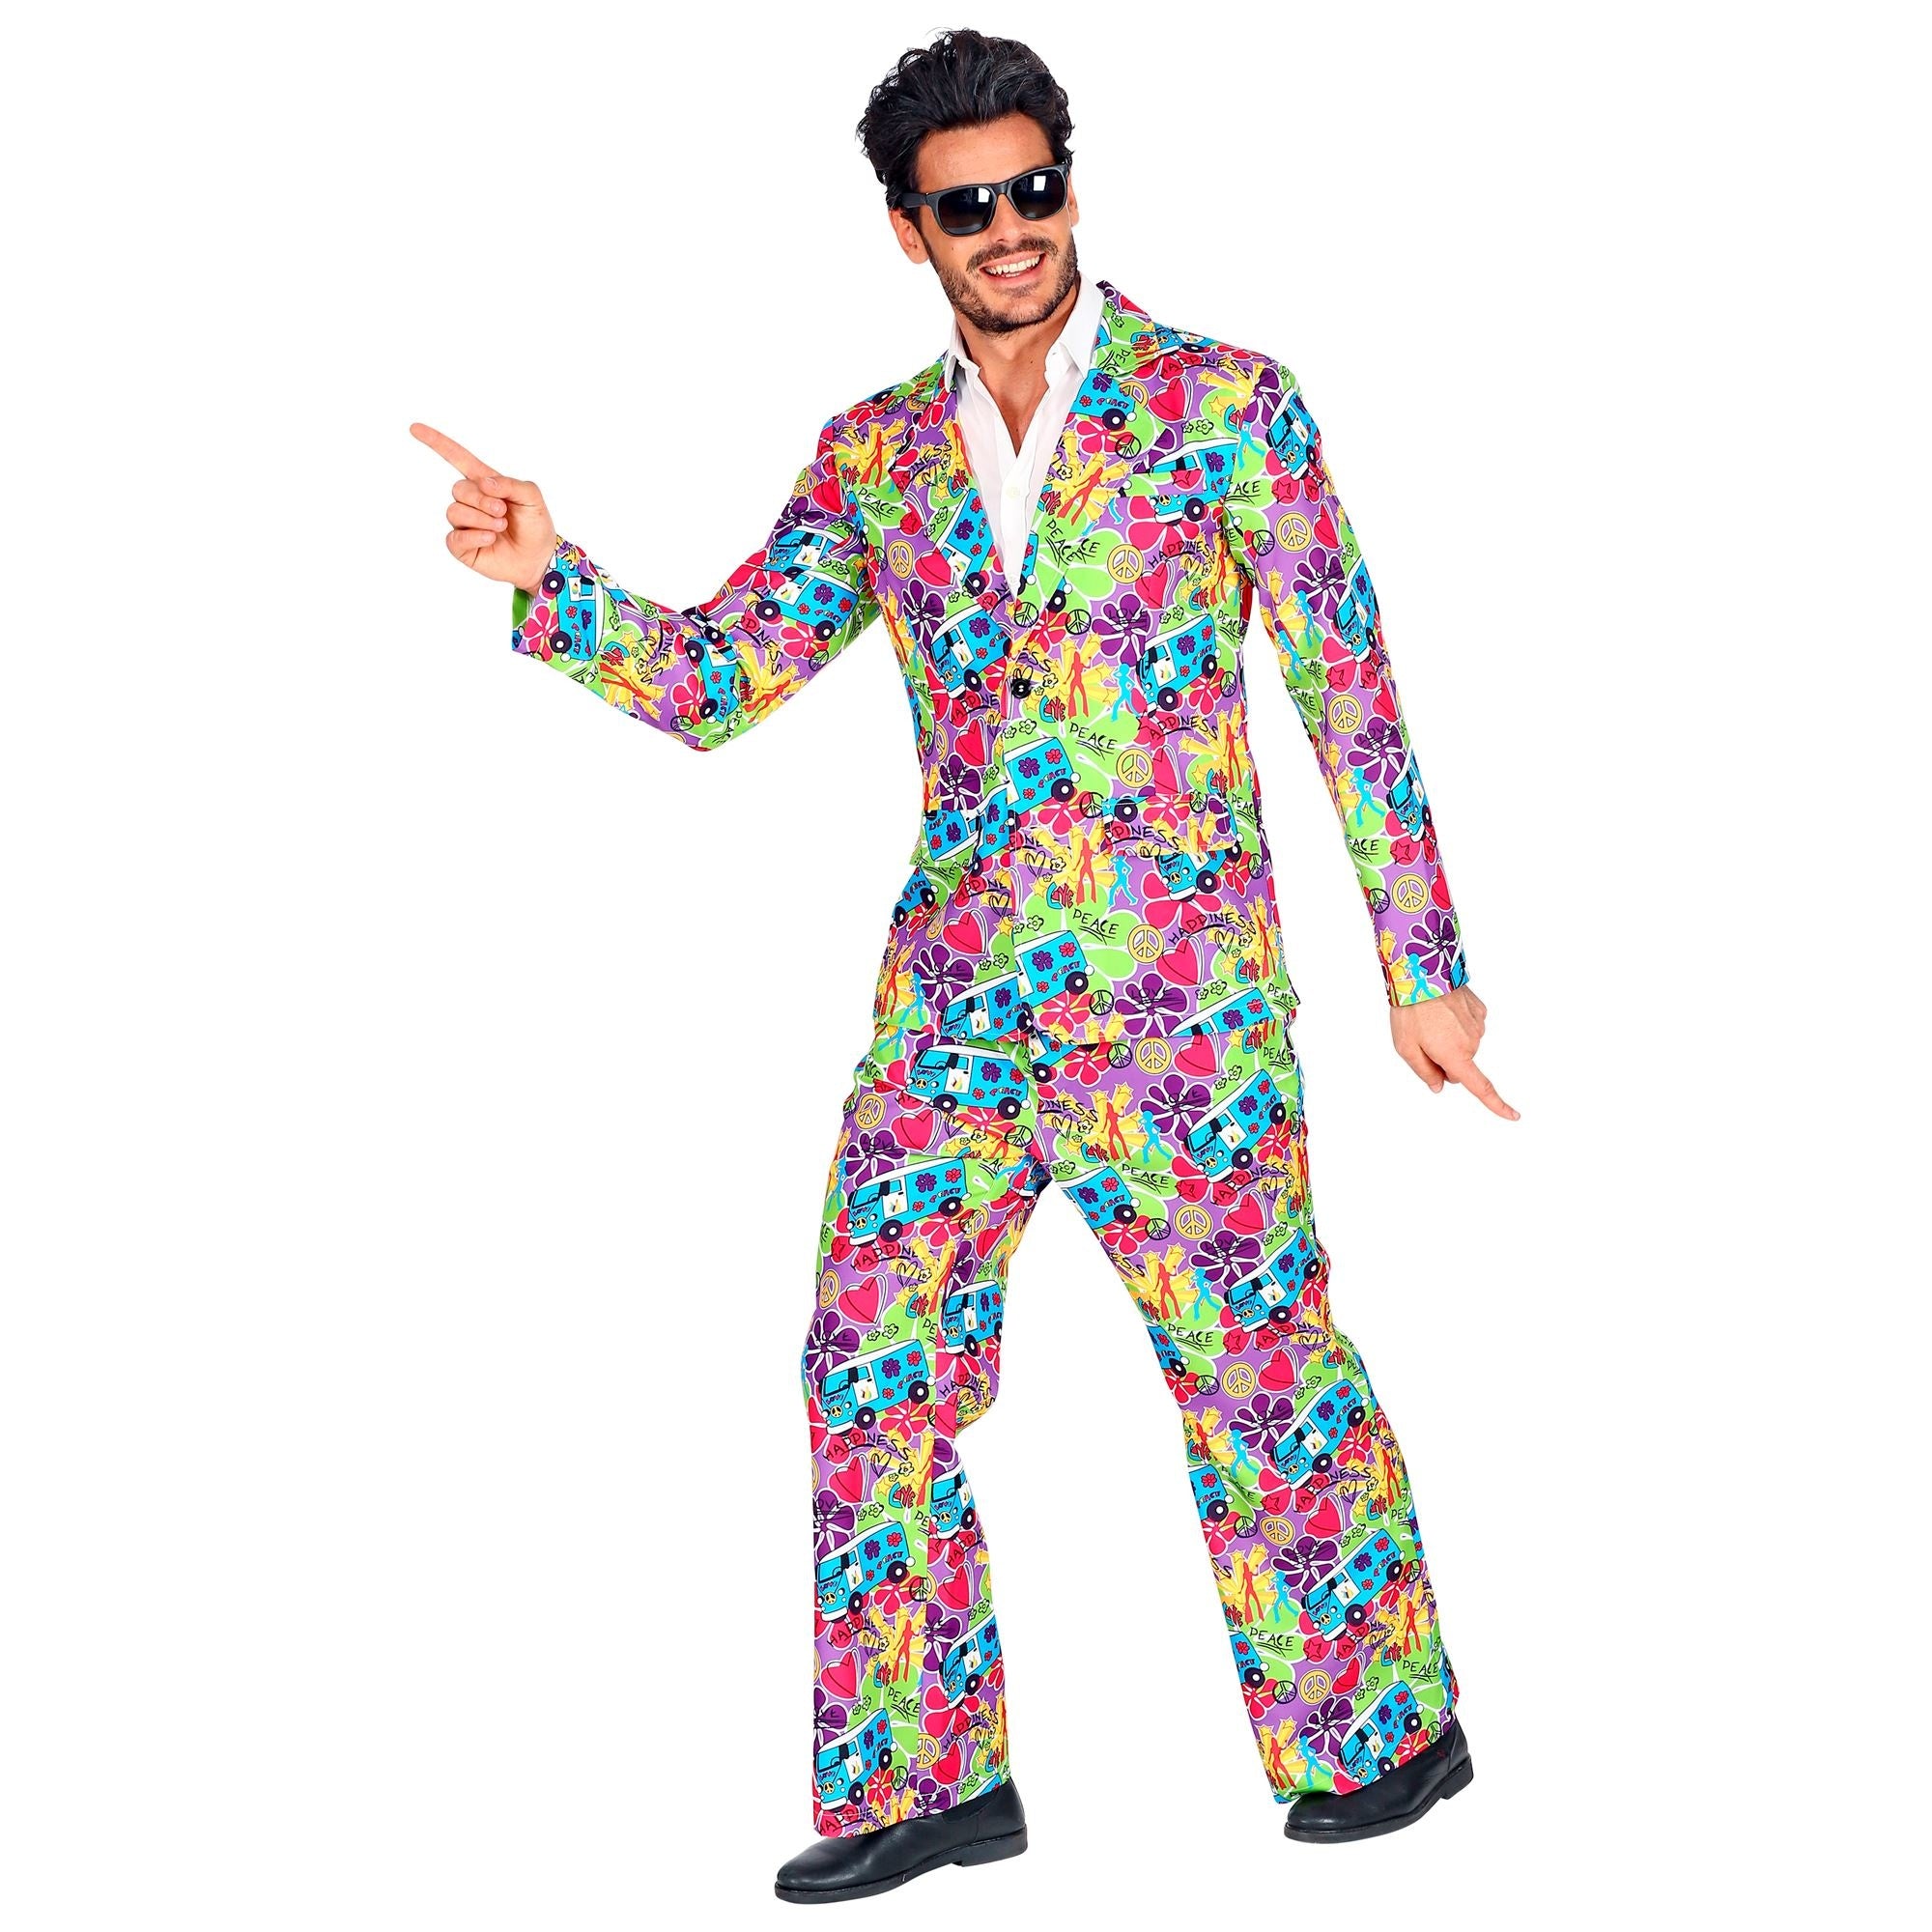 Widmann - Hippie Kostuum - Vrolijke Kleurige Hippie Symbolen - Man - multicolor - XL - Carnavalskleding - Verkleedkleding